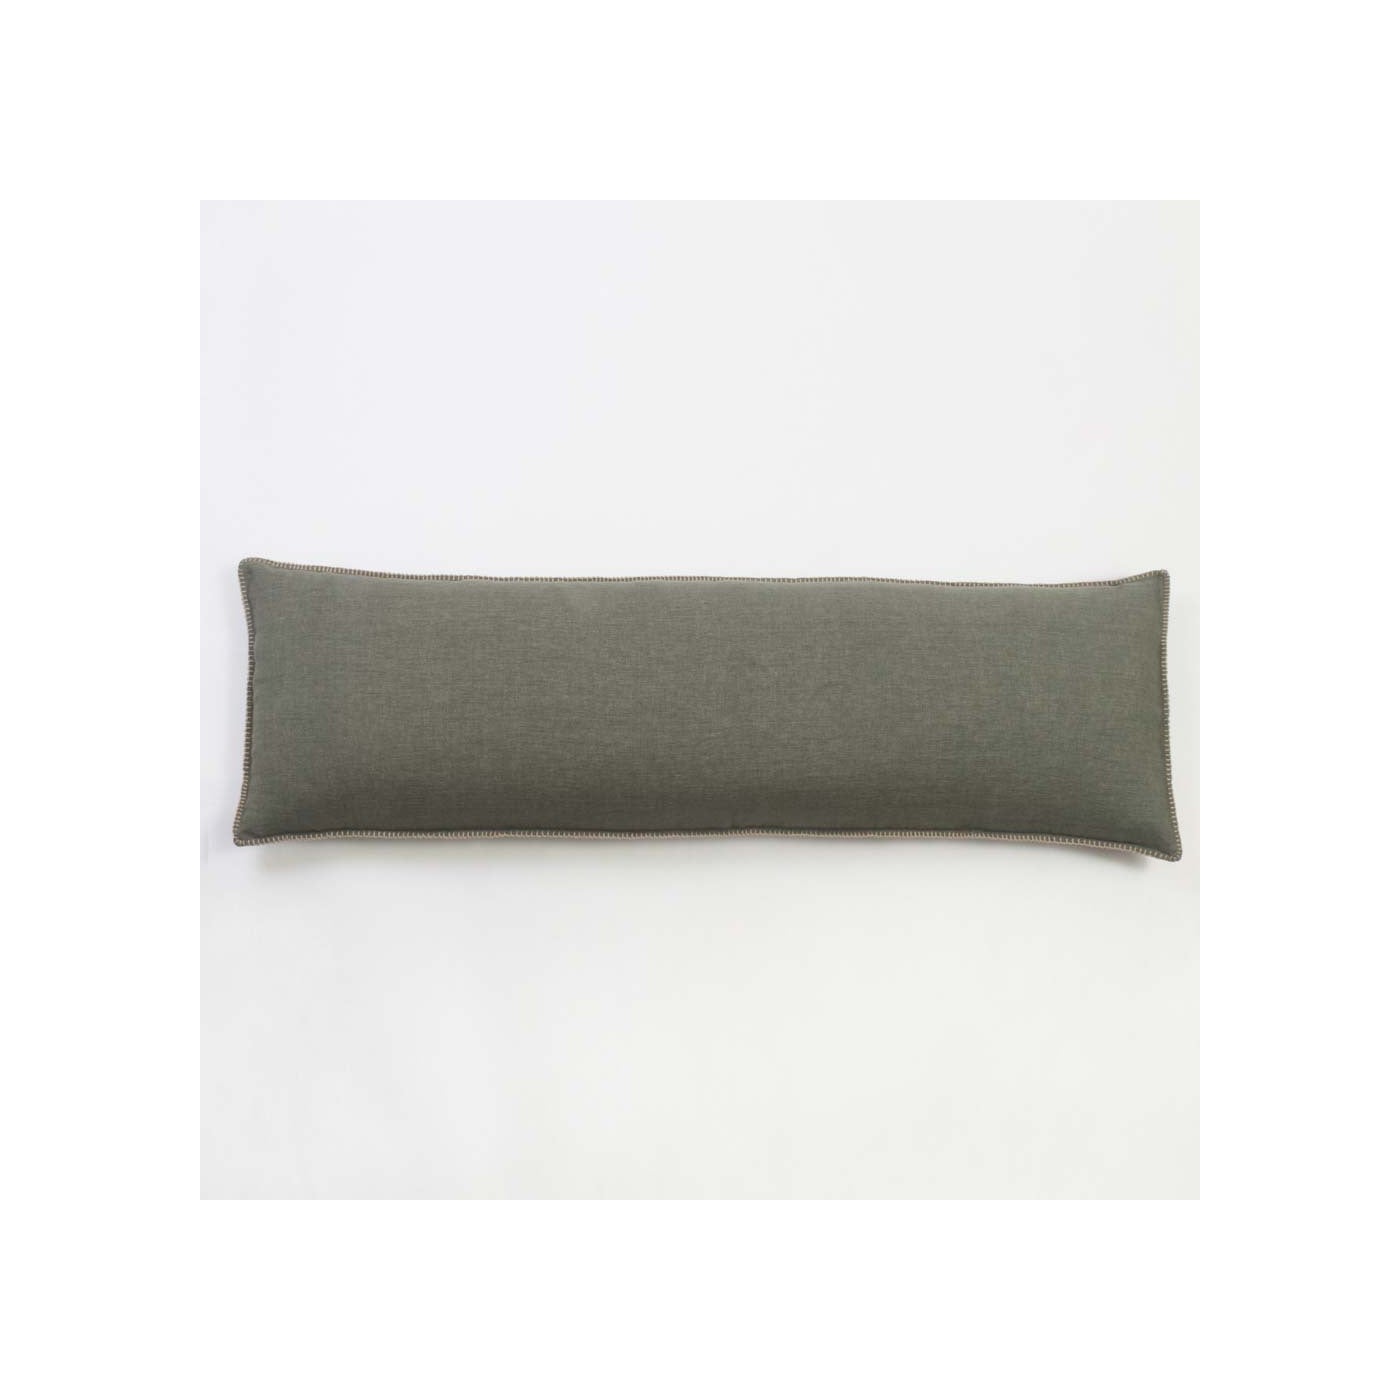 Franklin XL Lumbar Pillow Cover